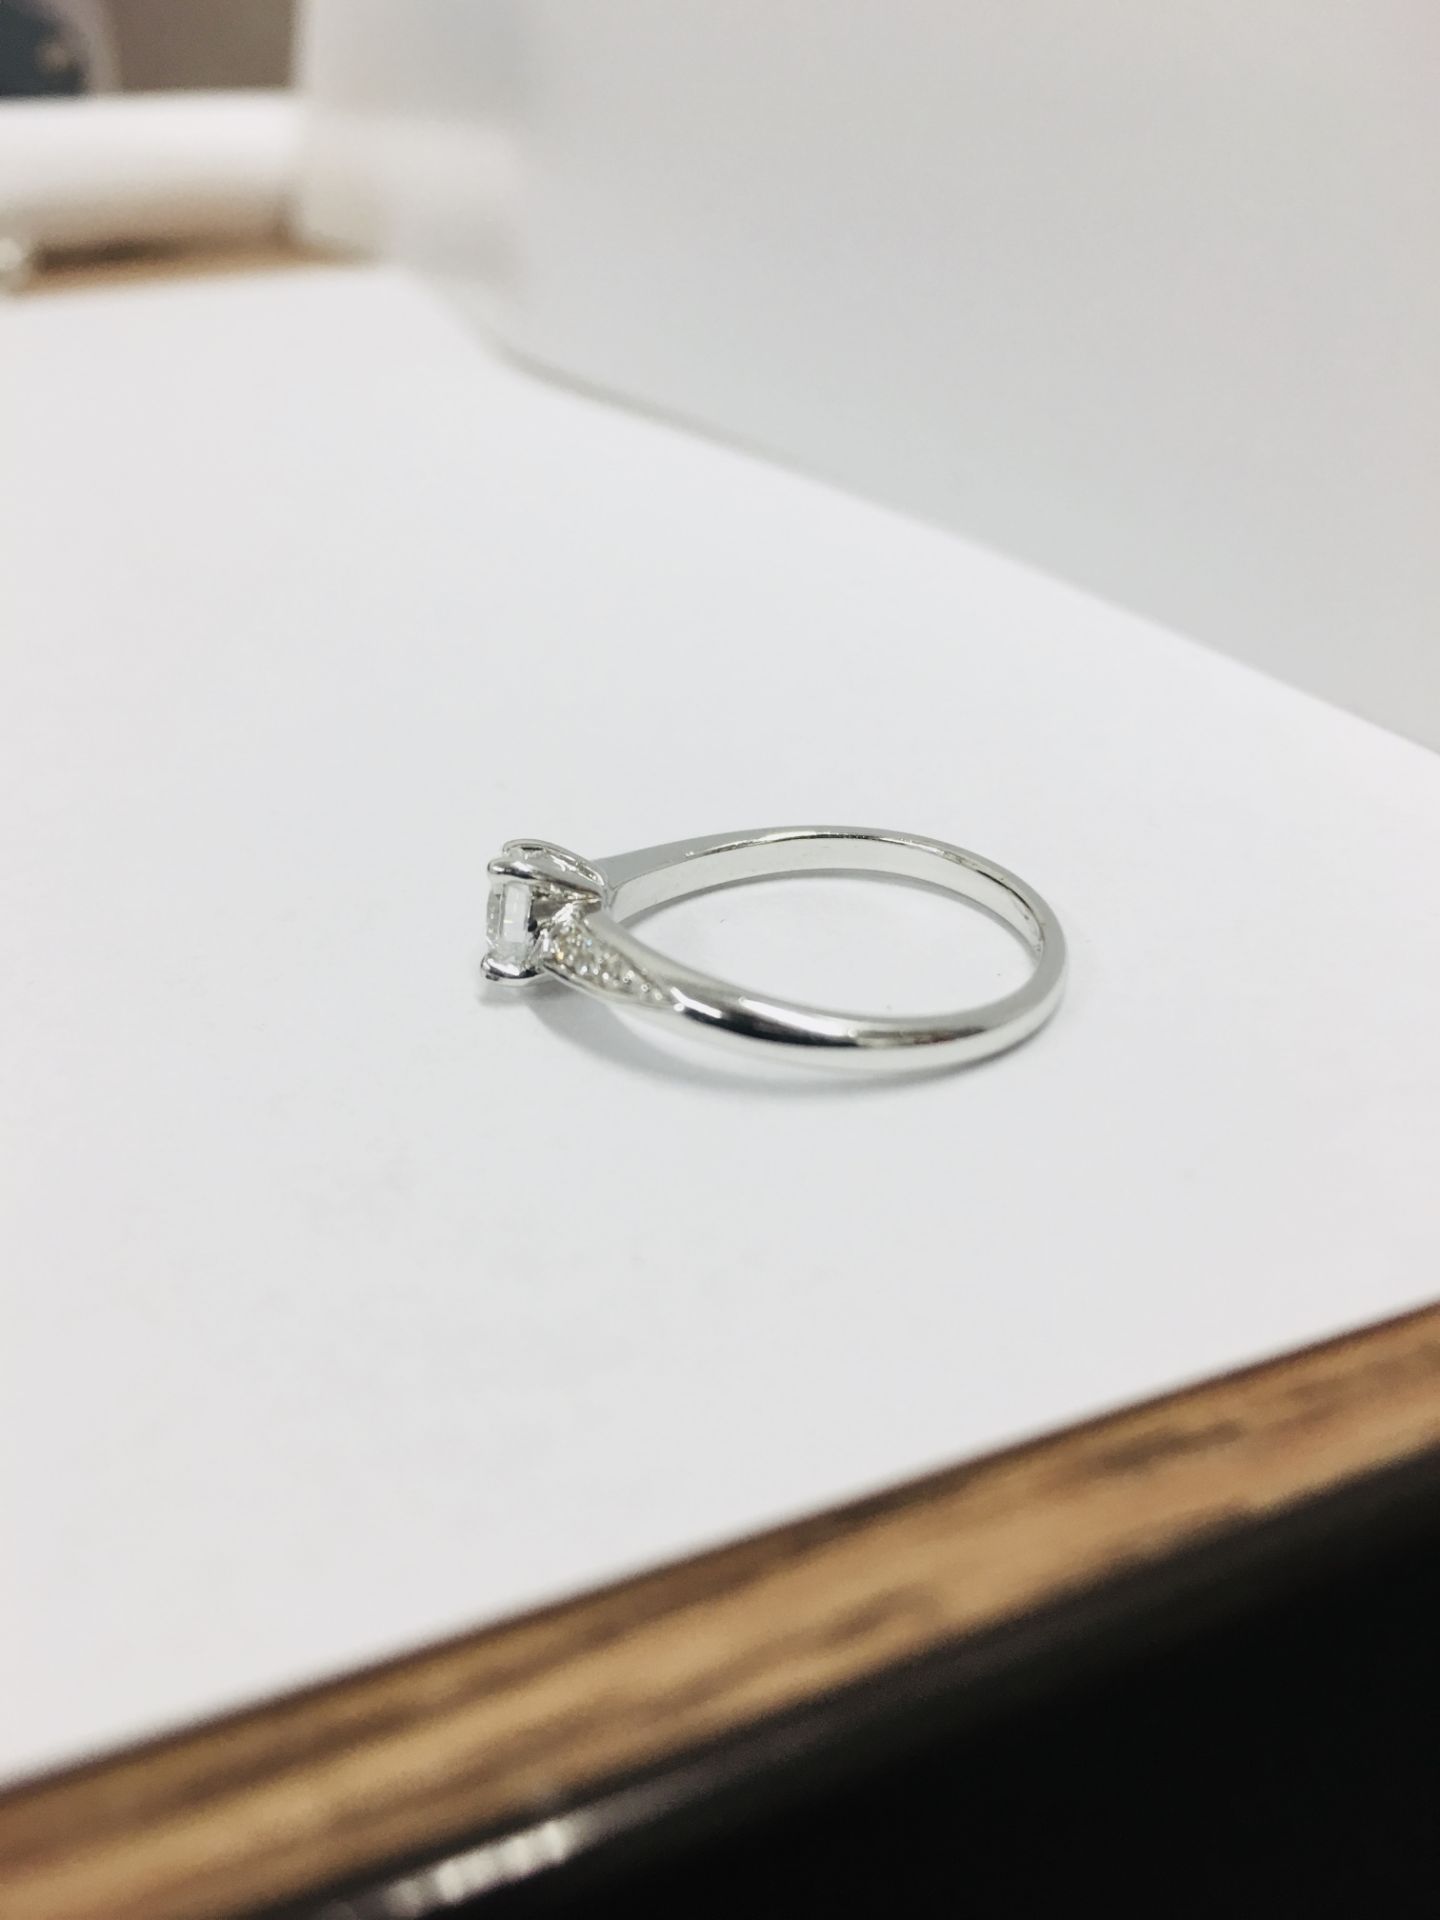 platinum damond solitaire ring,0.50ct brilliant cut diamond h colour vs clarity(clarity enhanced), - Image 3 of 3